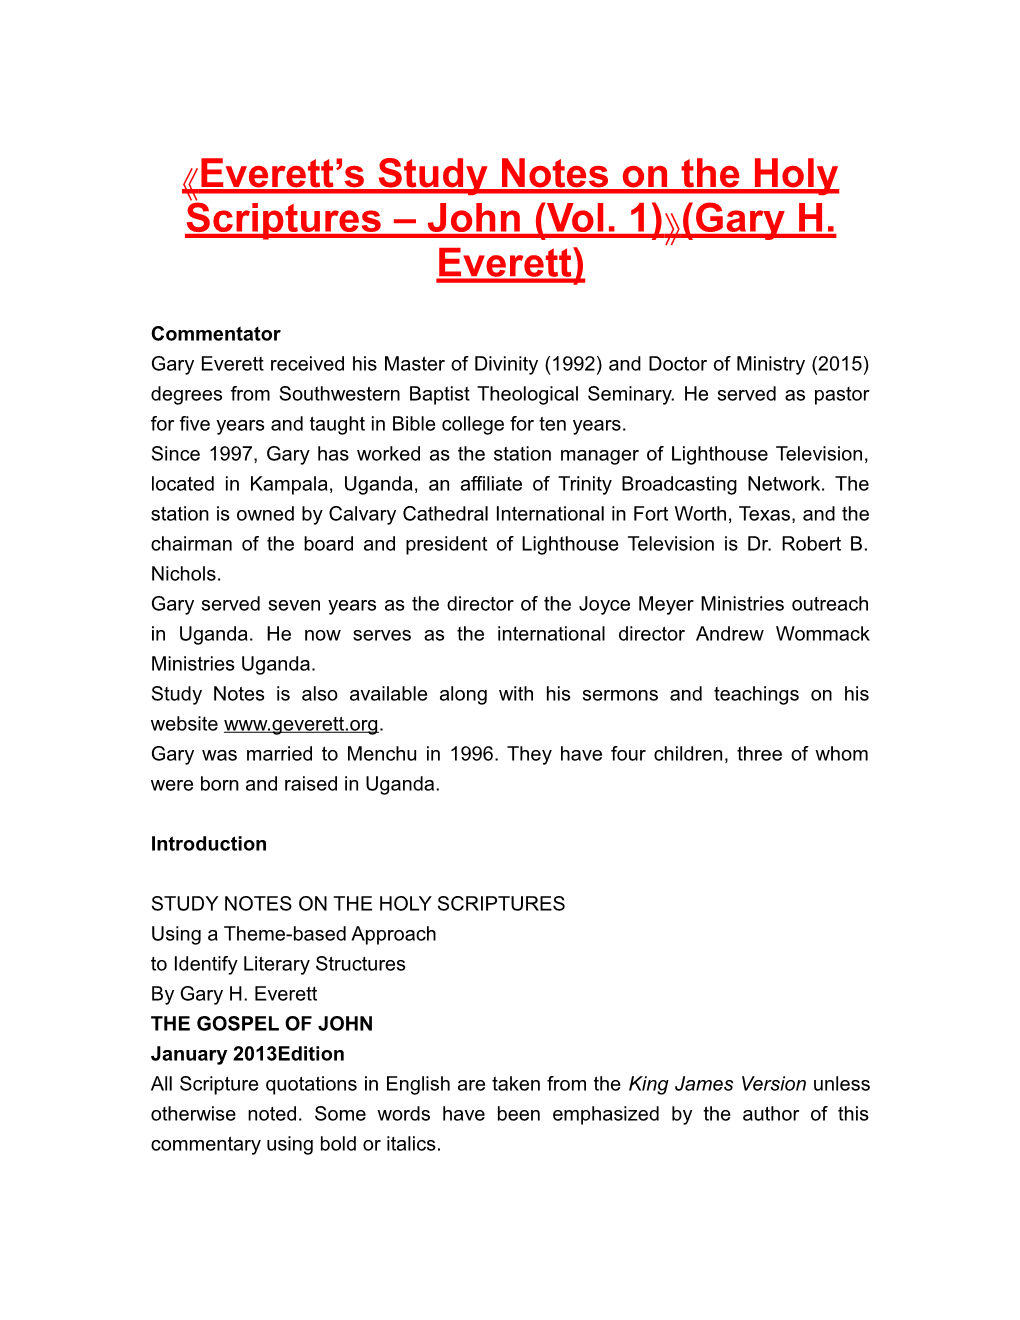 Everett S Study Notes on the Holy Scriptures John (Vol. 1) (Gary H. Everett)